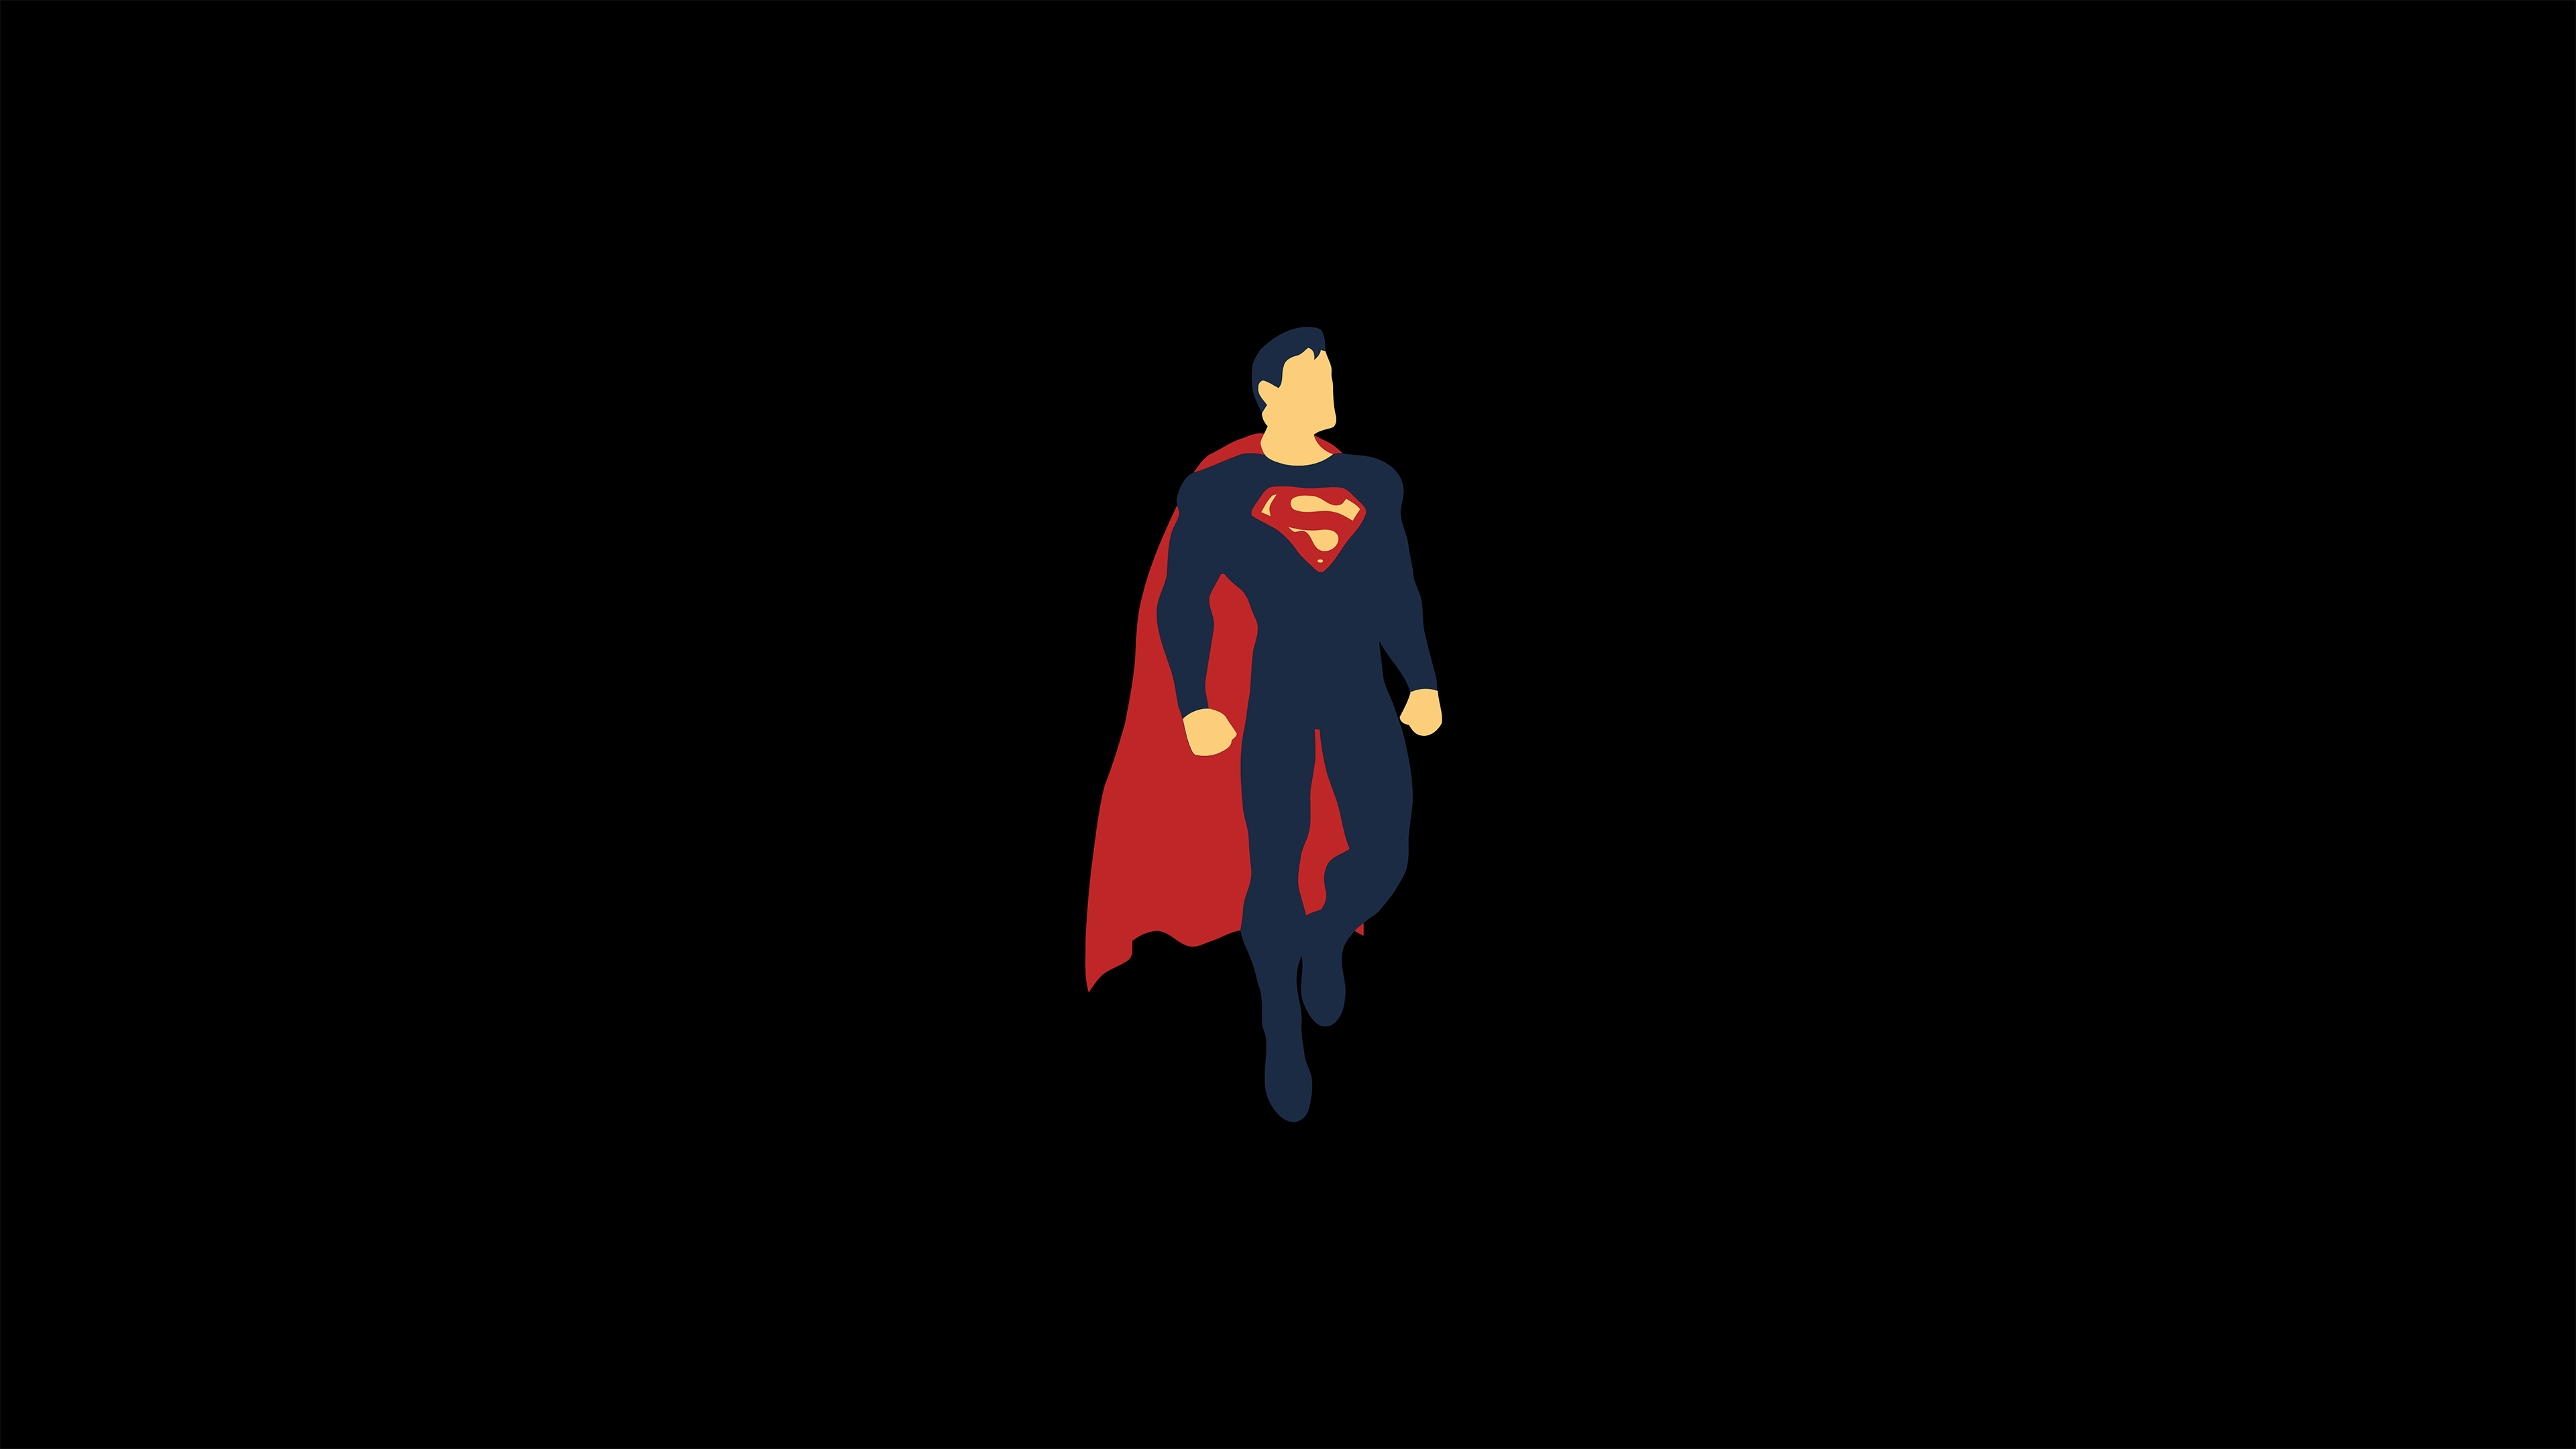 General 3840x2160 minimalism simple background black background Superman vector vector art superhero DC Comics